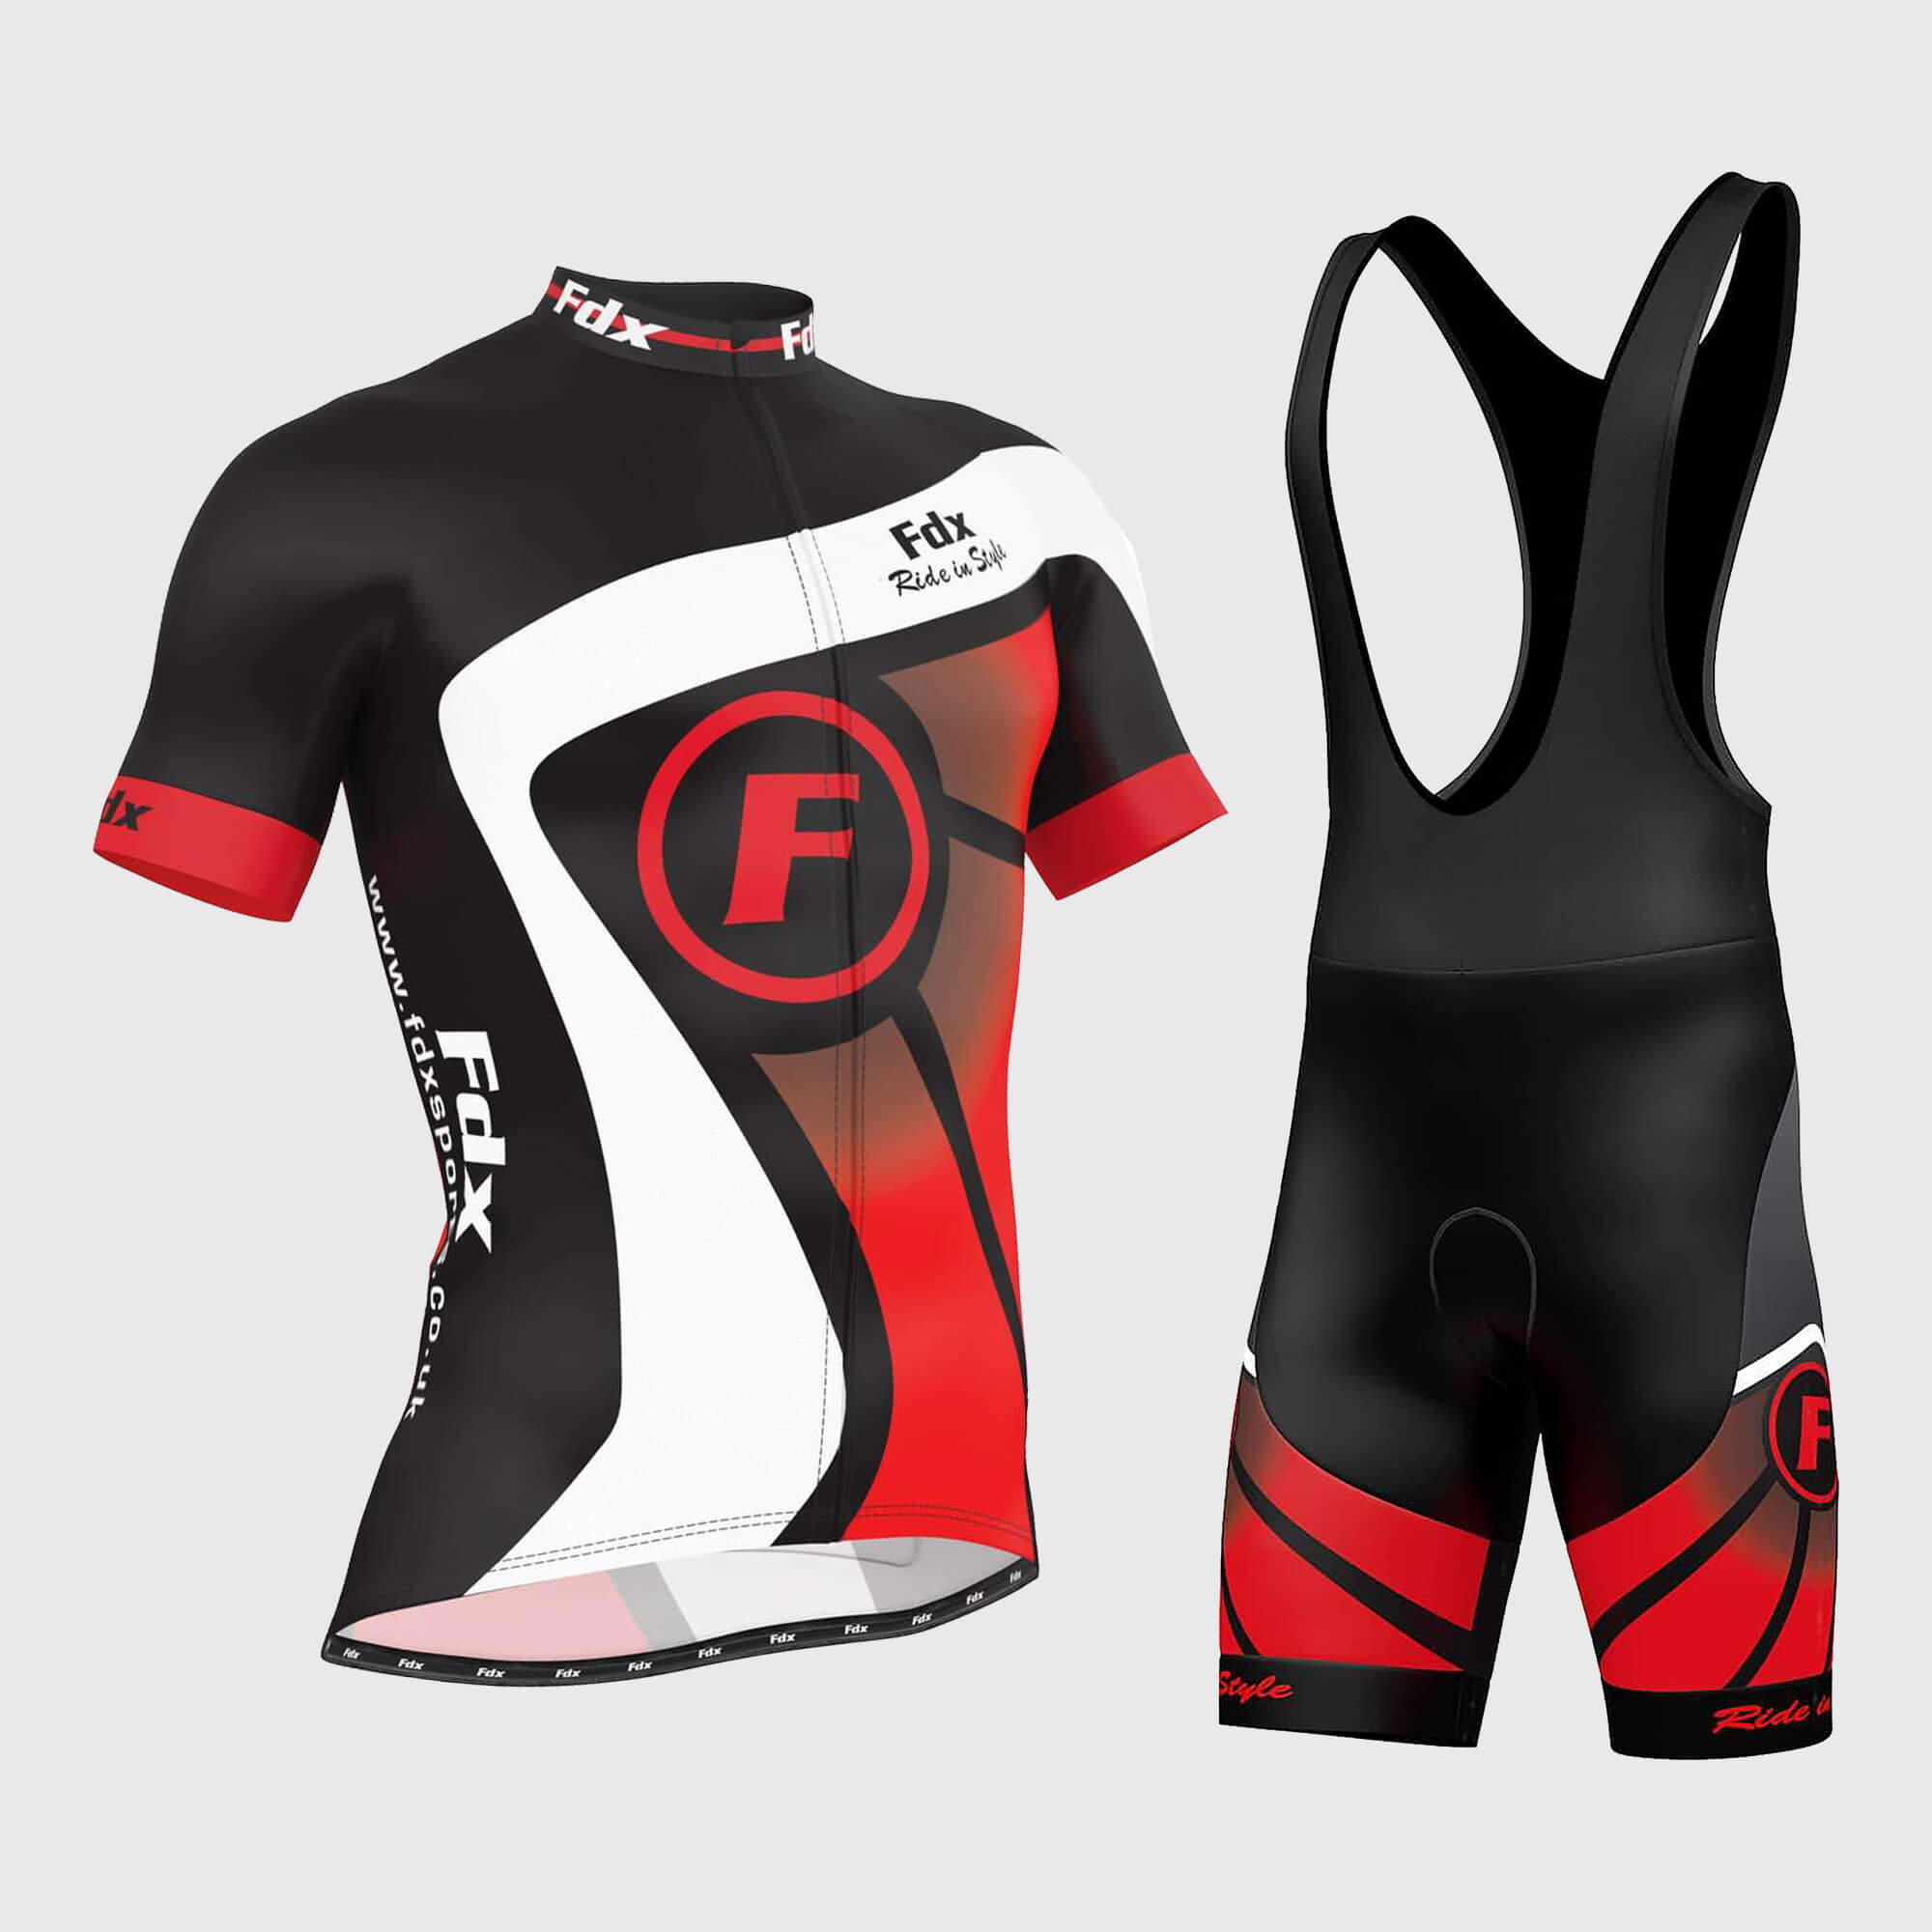 Fdx Mens Black & Red Short Sleeve Cycling Jersey & Gel Padded Bib Shorts Best Summer Road Bike Wear Light Weight, Hi-viz Reflectors & Pockets - Signature